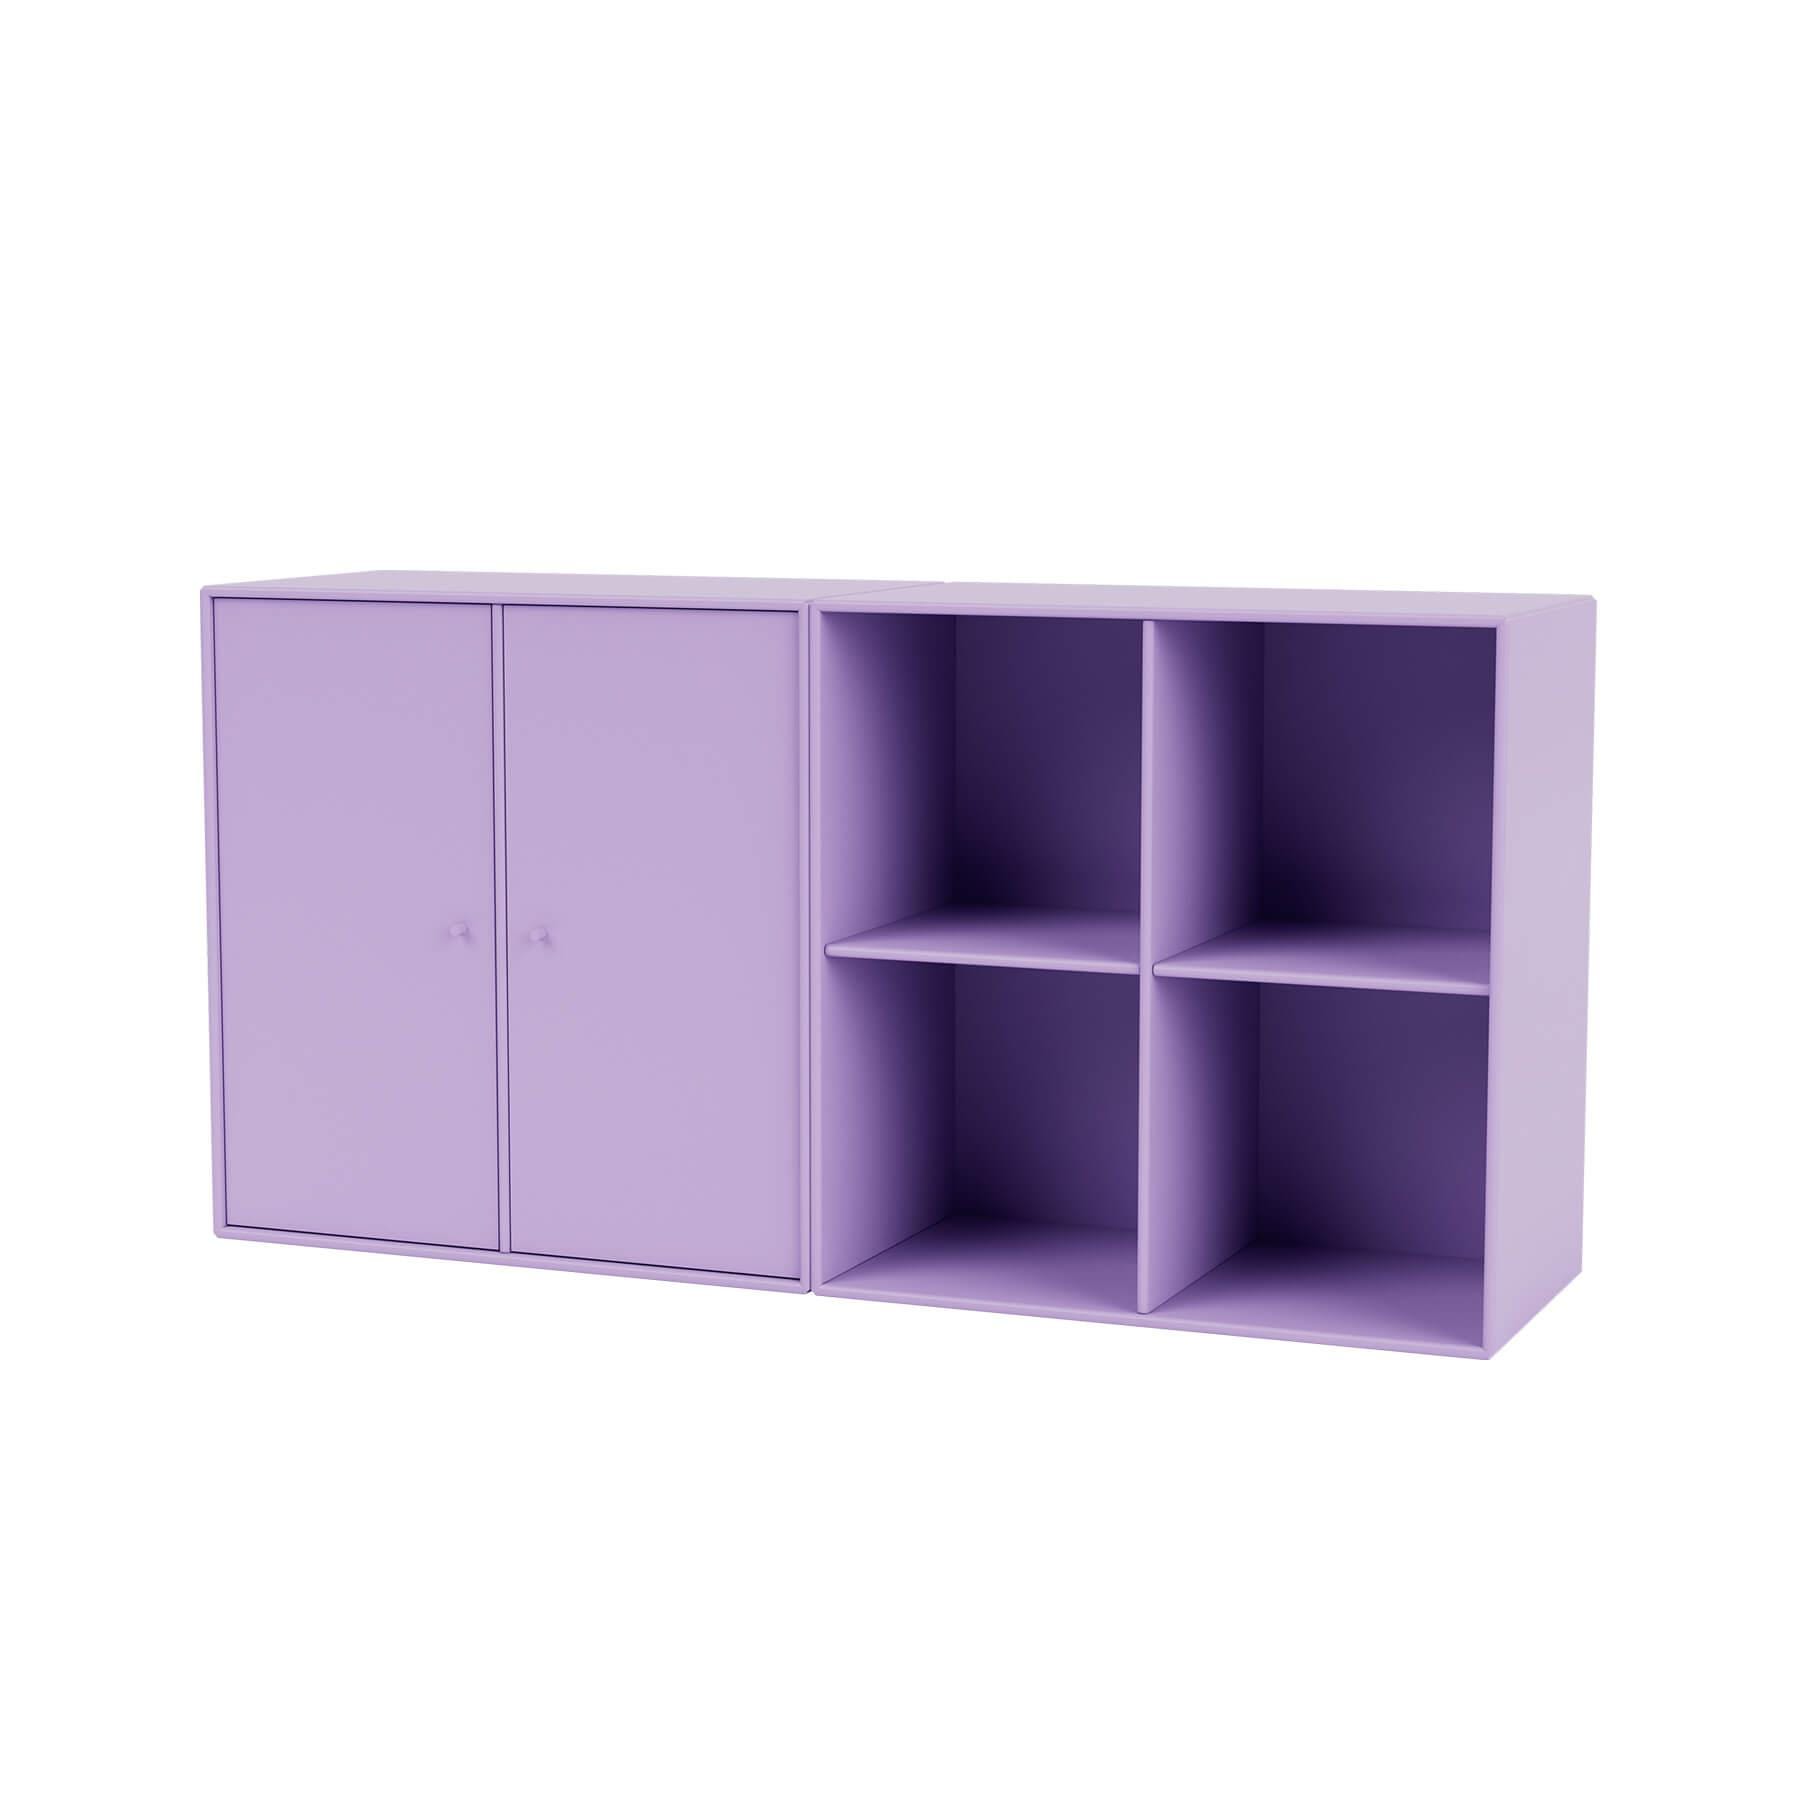 Montana Pair Classic Sideboard Iris Wall Mounted Purple Designer Furniture From Holloways Of Ludlow